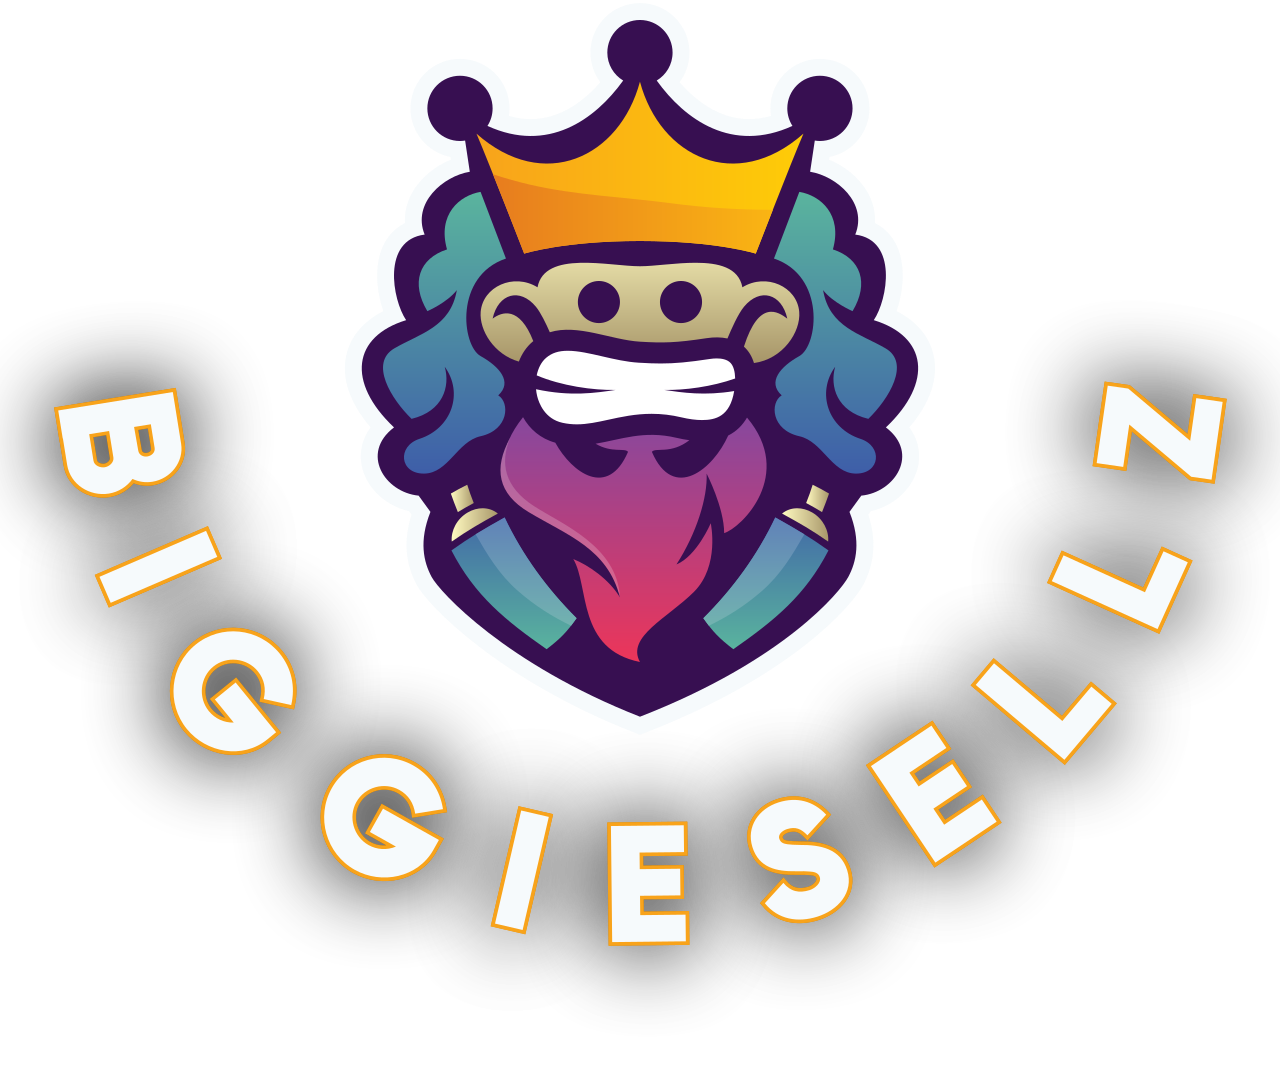 BiggieSellz's logo